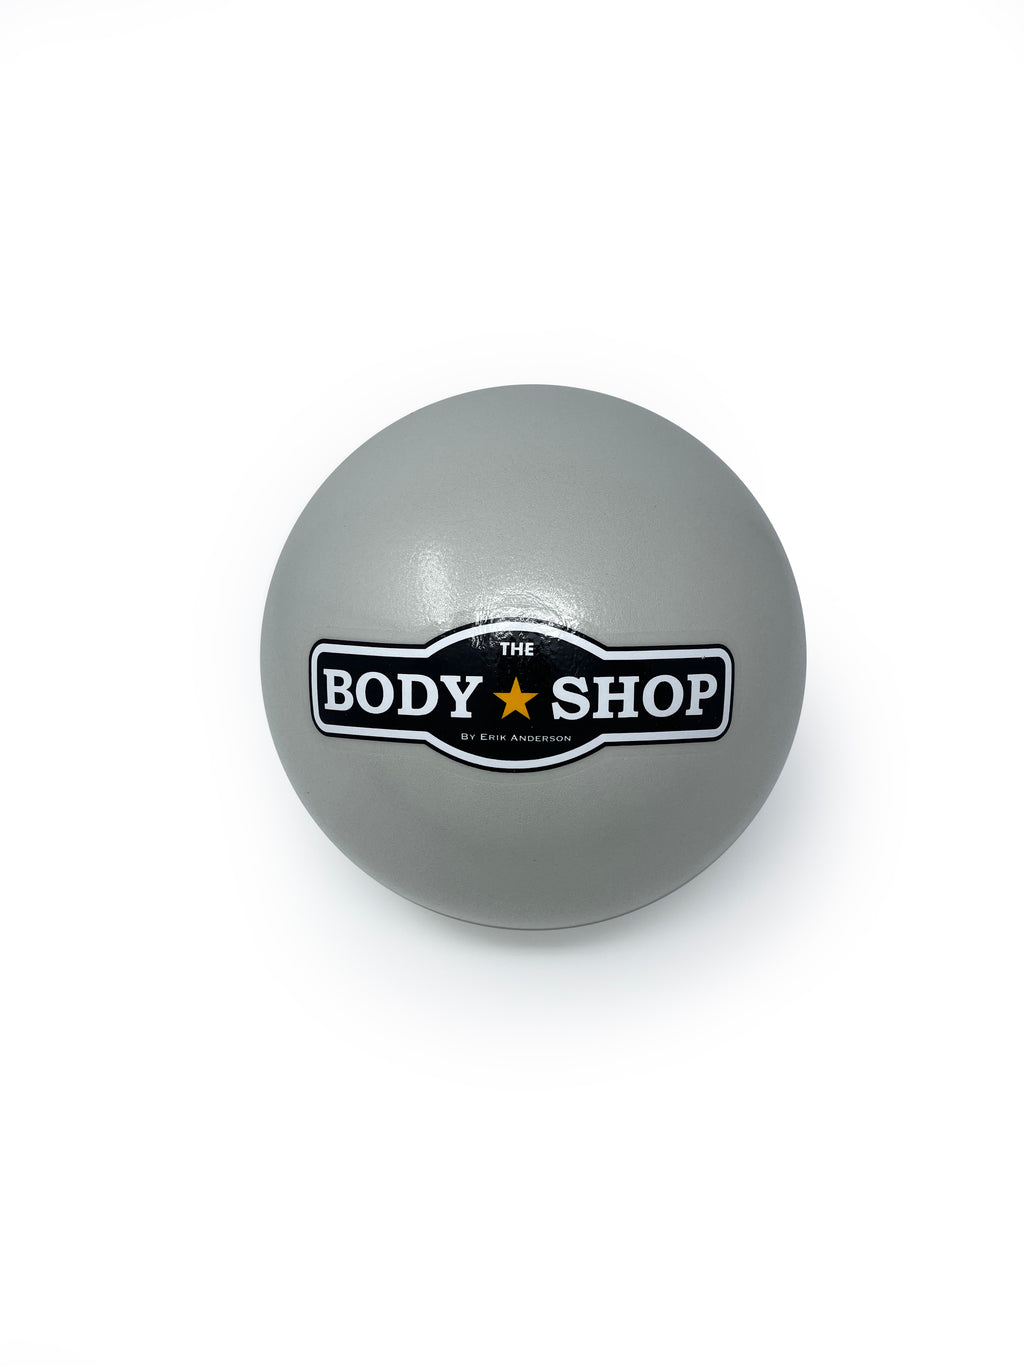 The BodyShop Ball